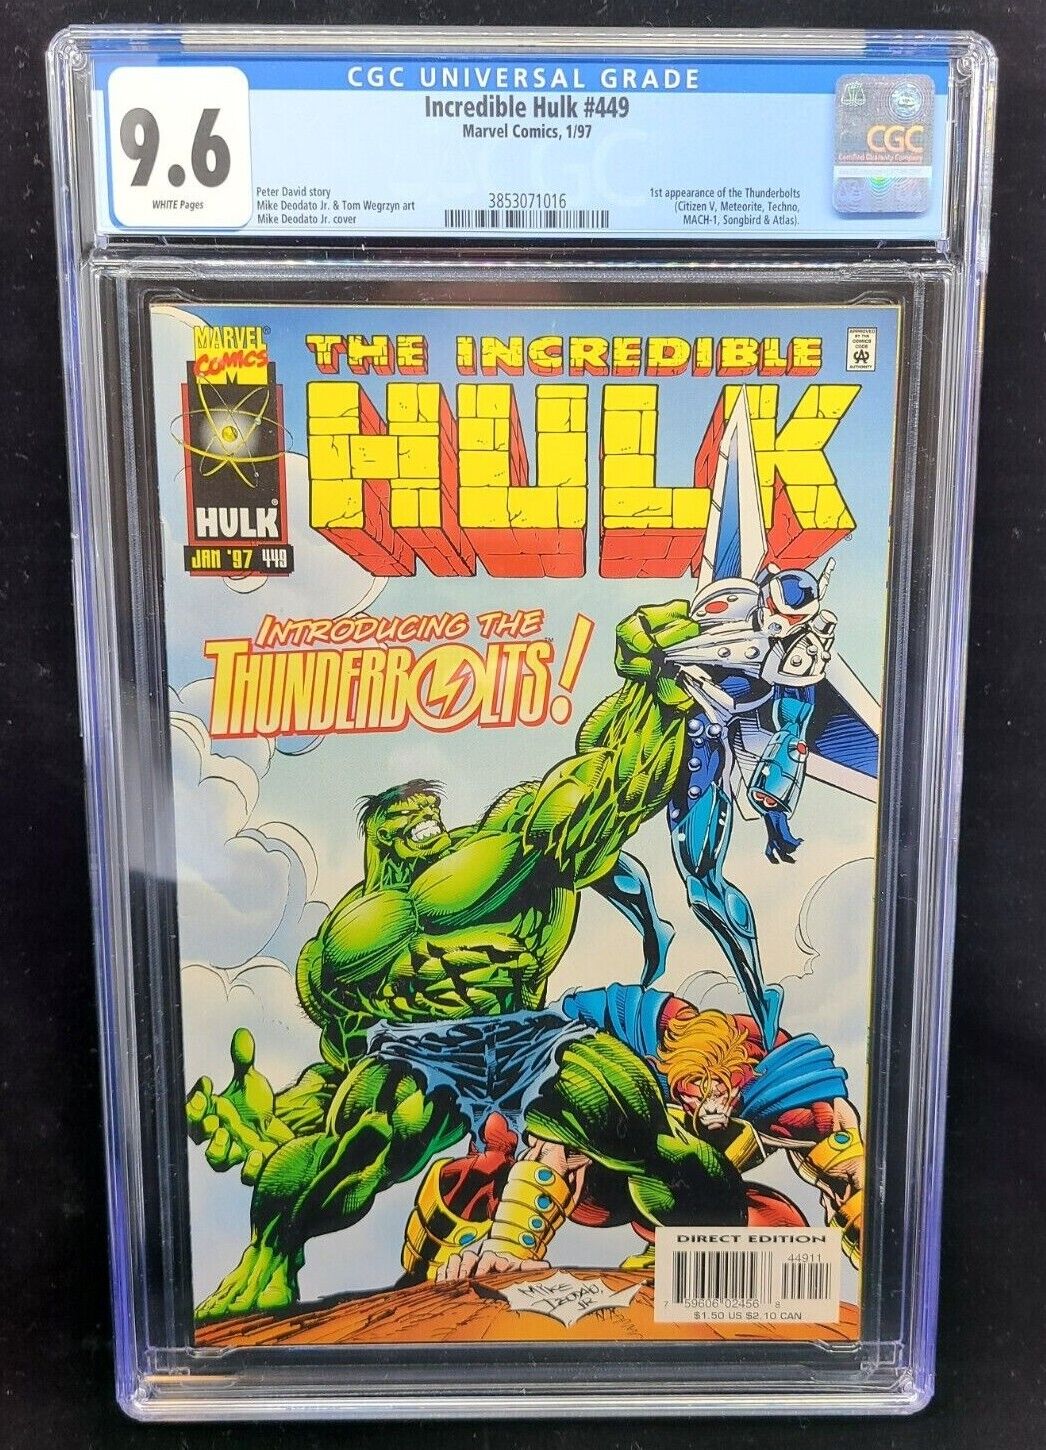 Incredible Hulk #449 CGC 9.6 1st Appearance THUNDERBOLTS! MCU SPEC KEY